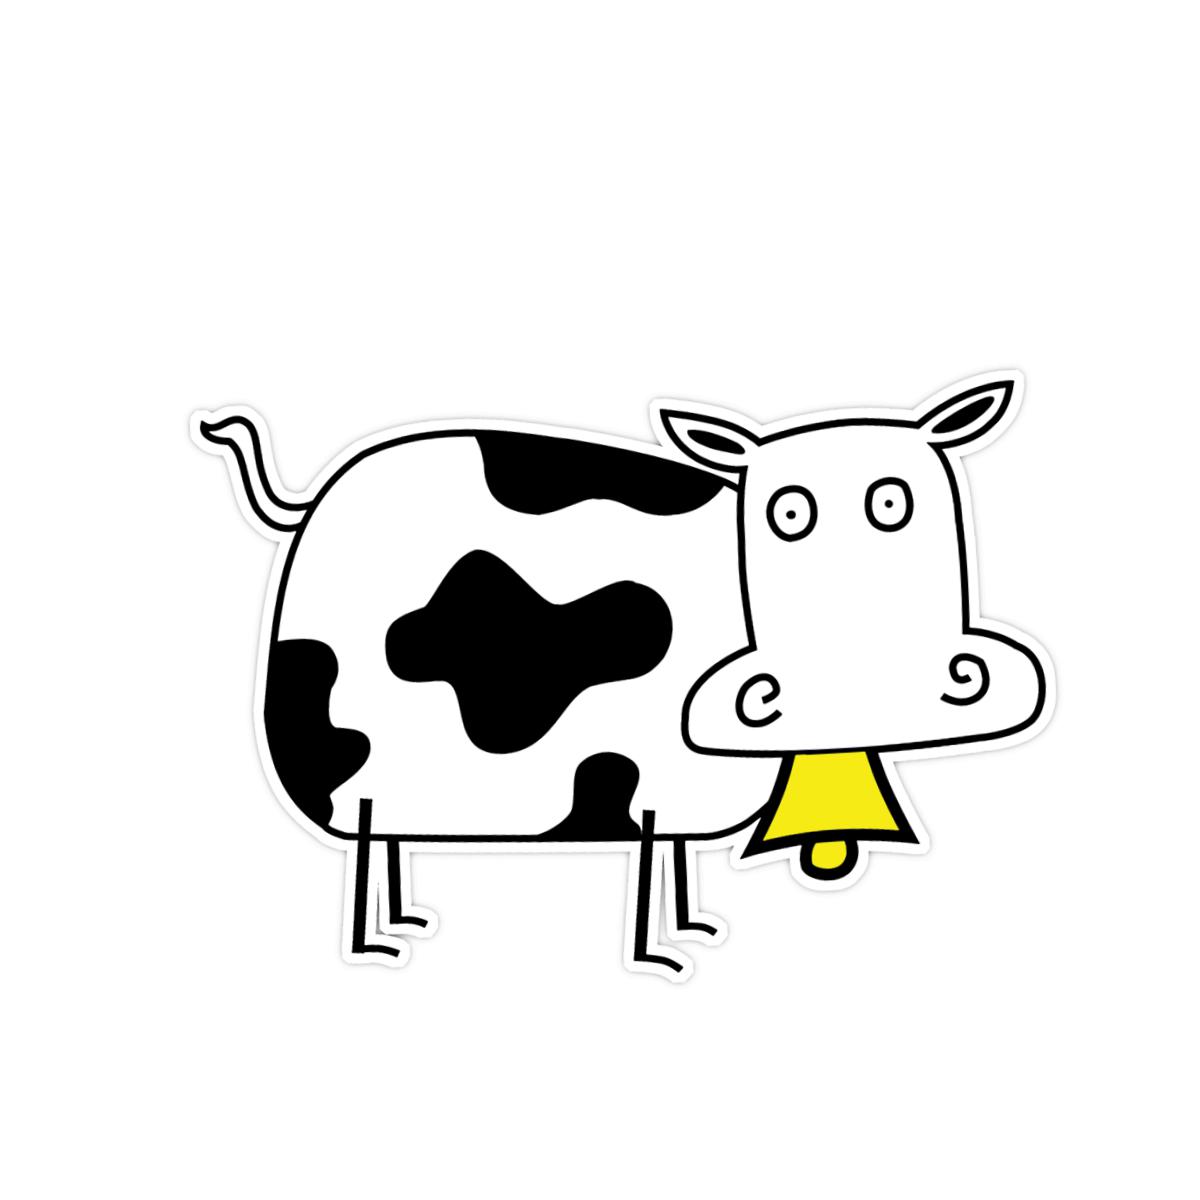 Mu Cow Sticker 4X4 matte